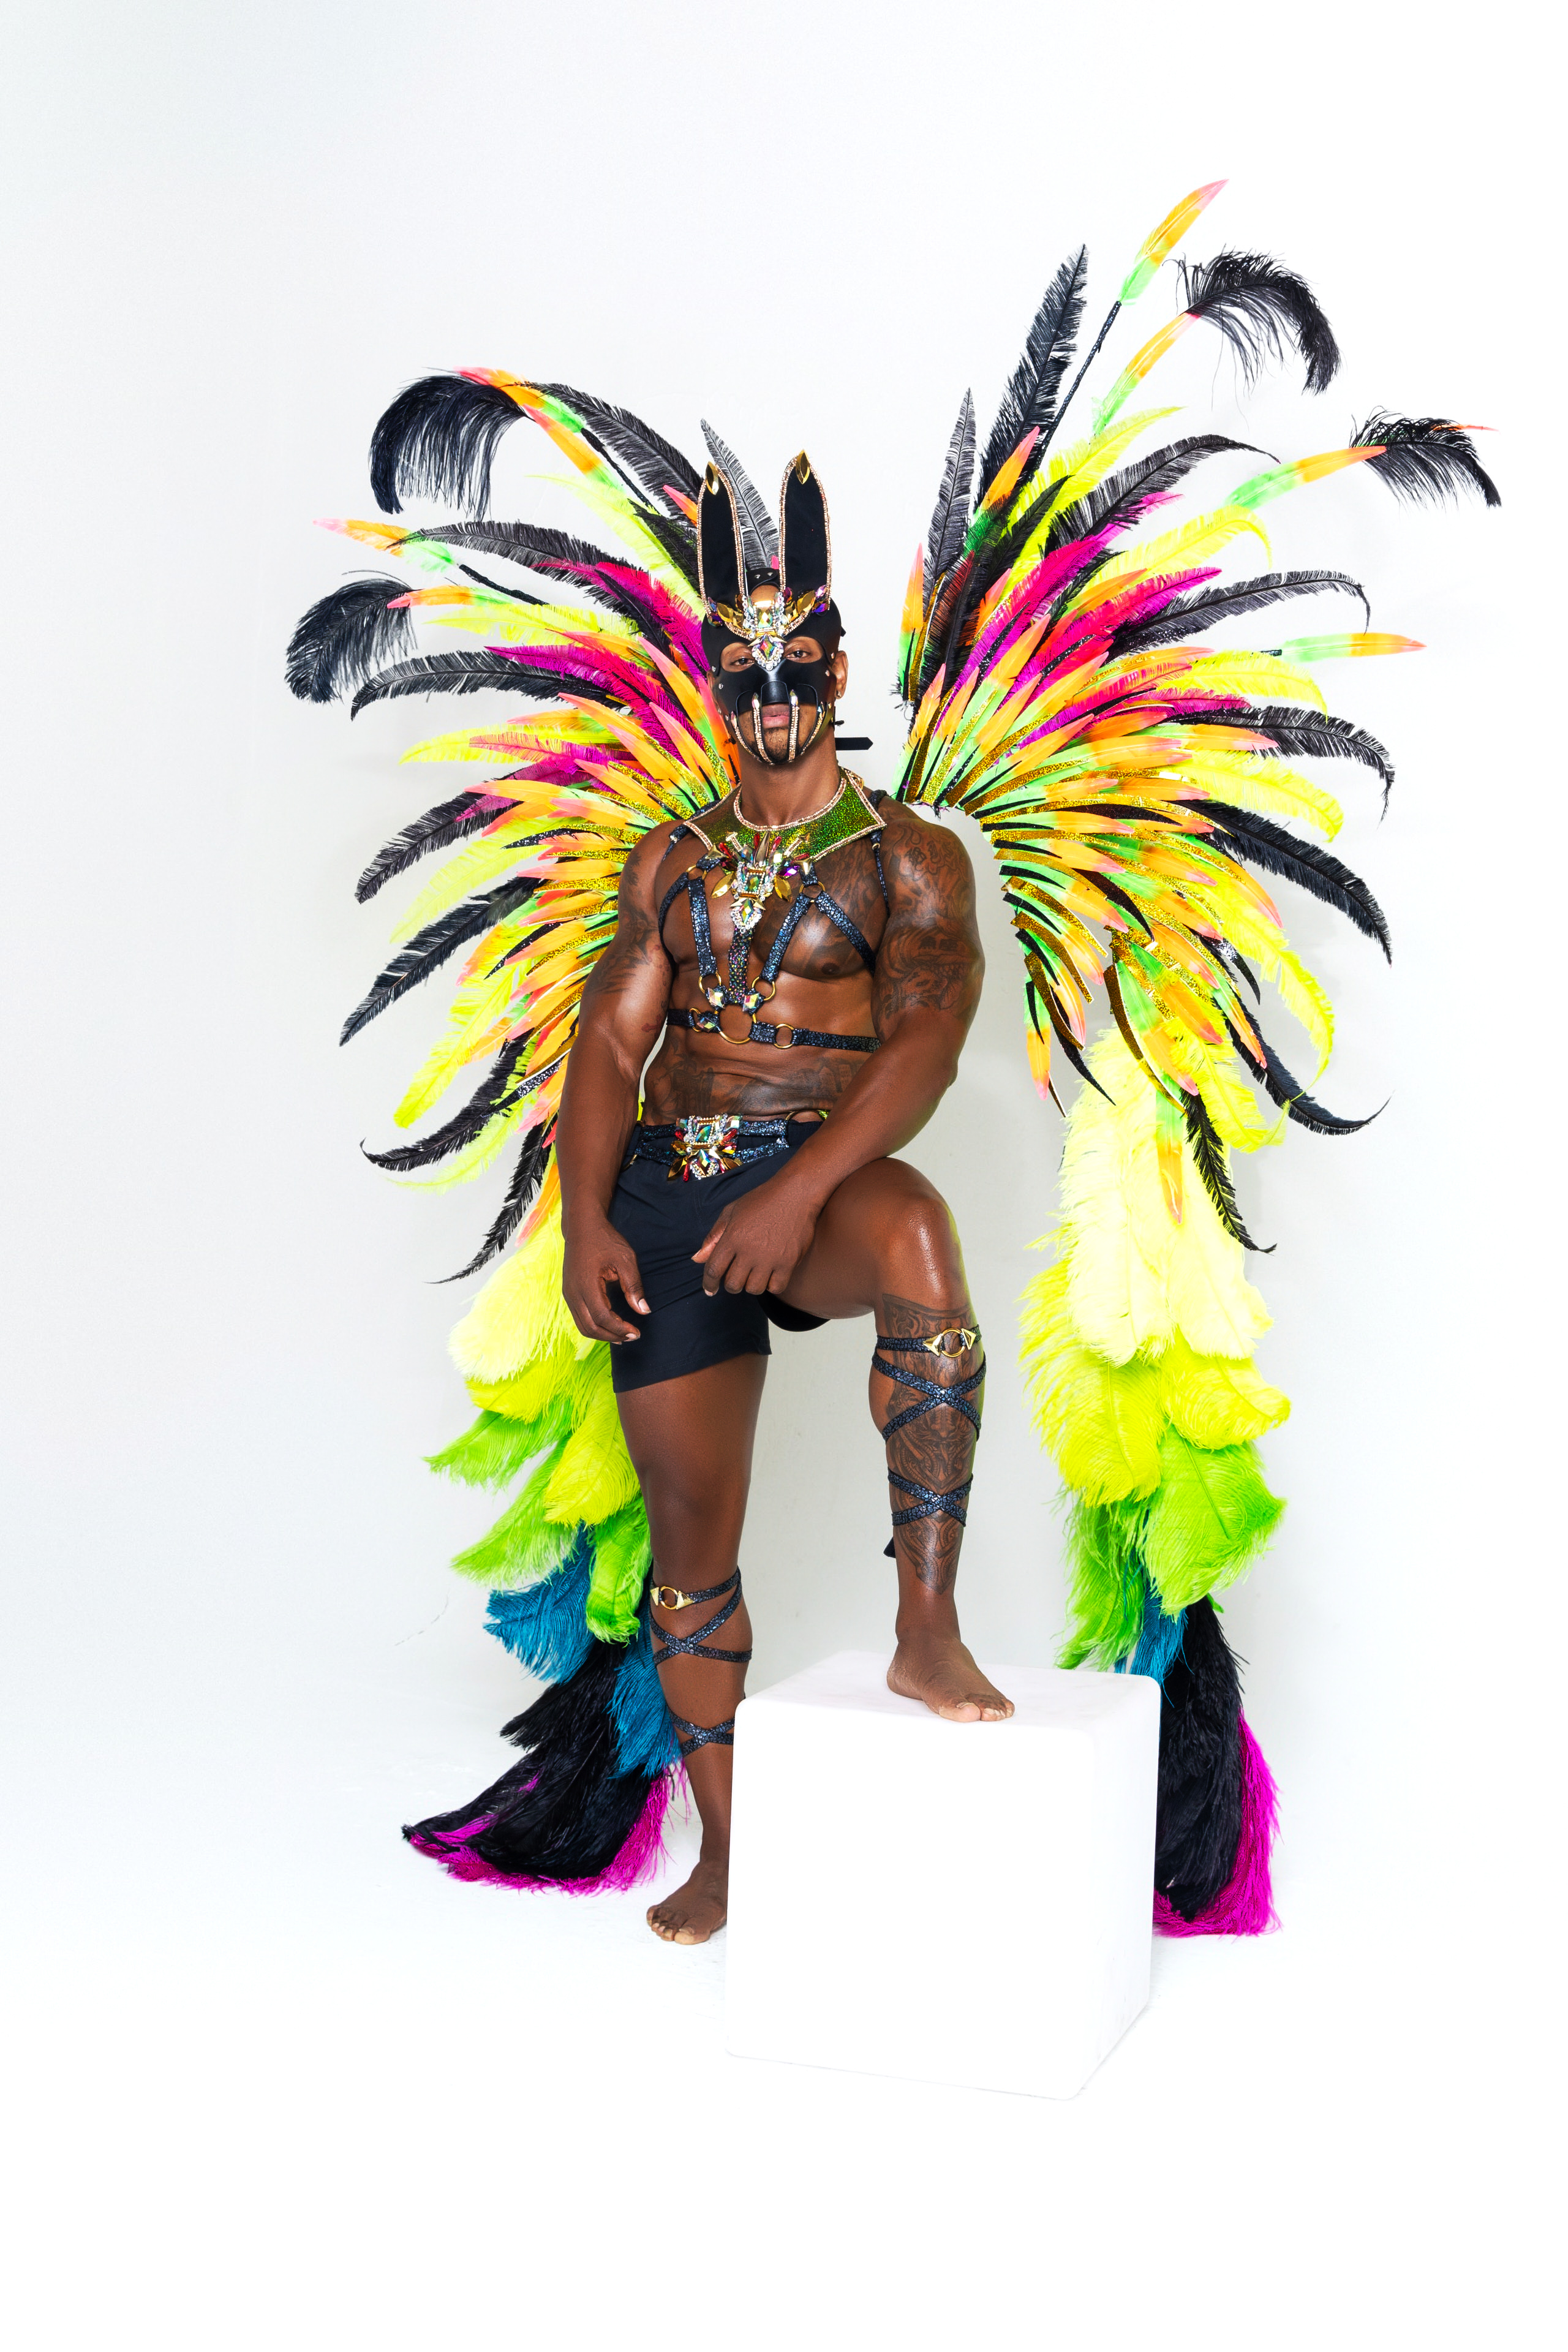 carnival costumes for men